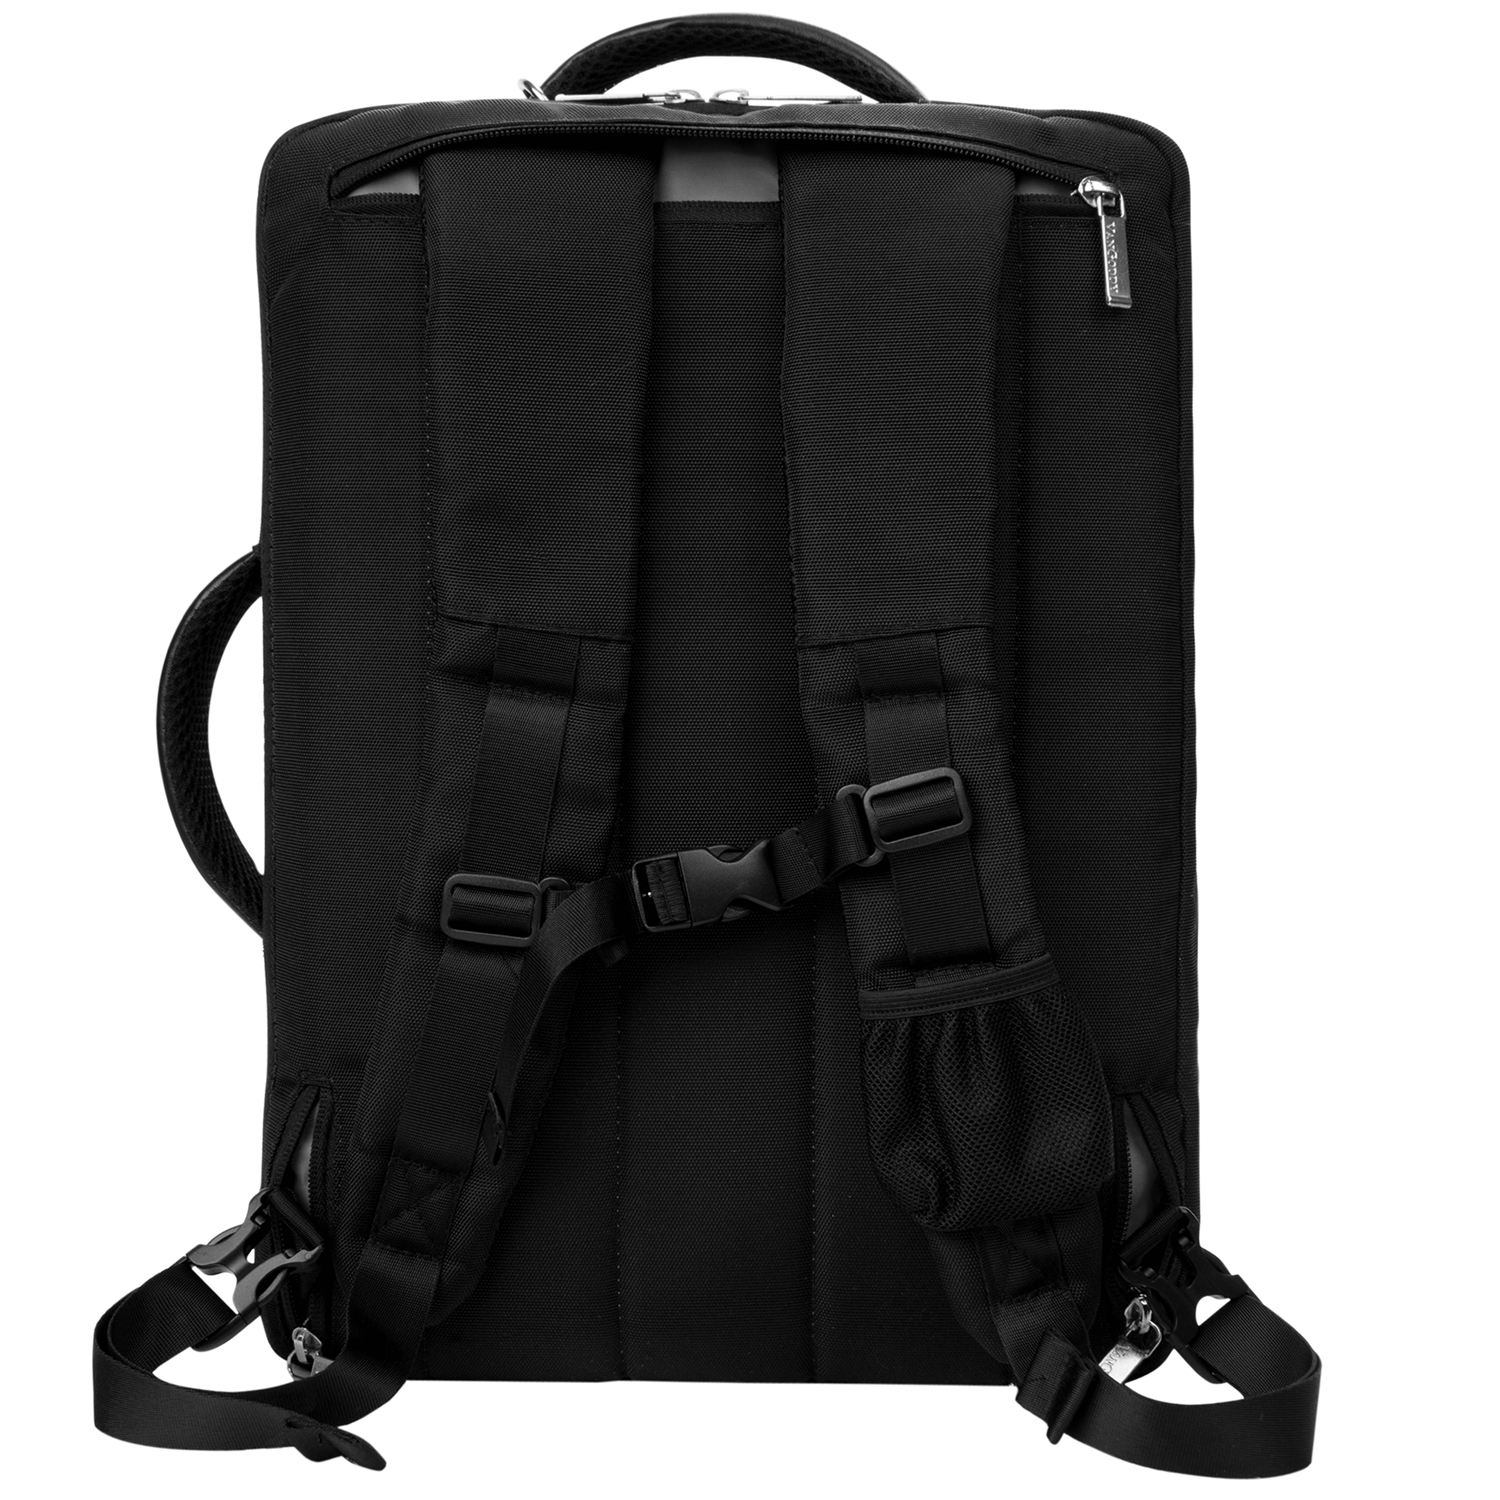 (Black) Vangoddy Slate Laptop Bag 17         